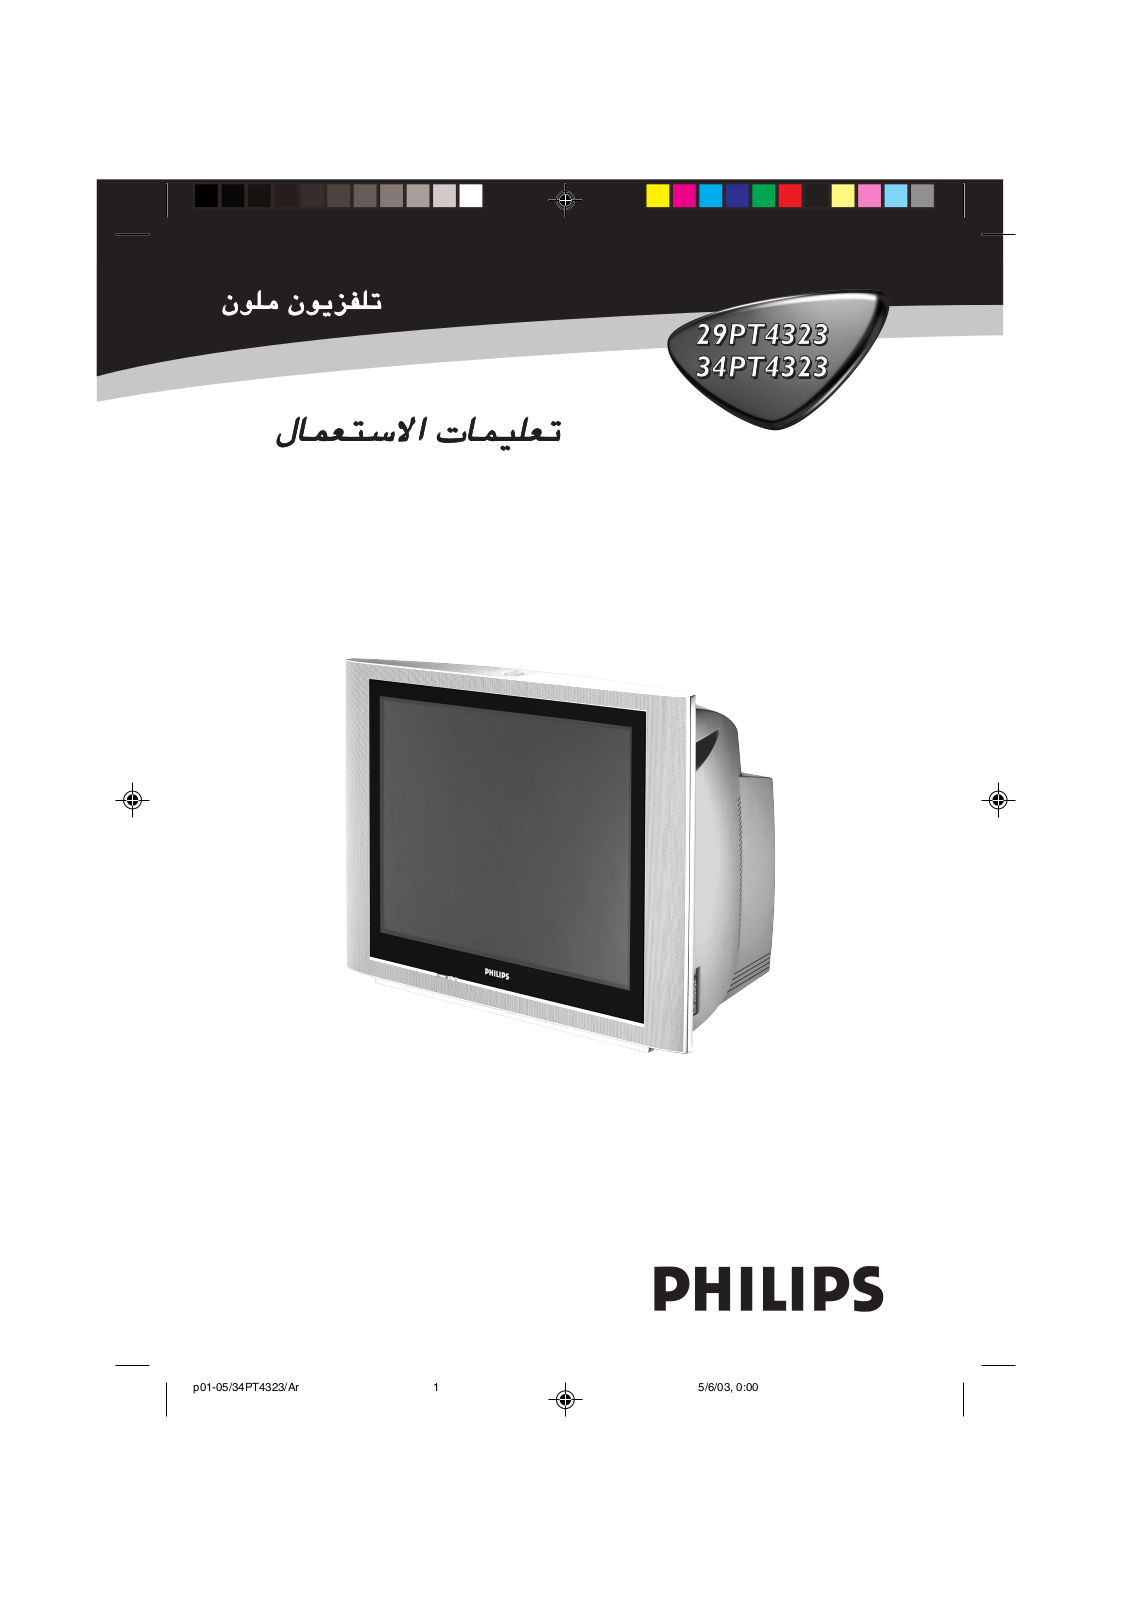 Philips 34PT4323/56R User Manual